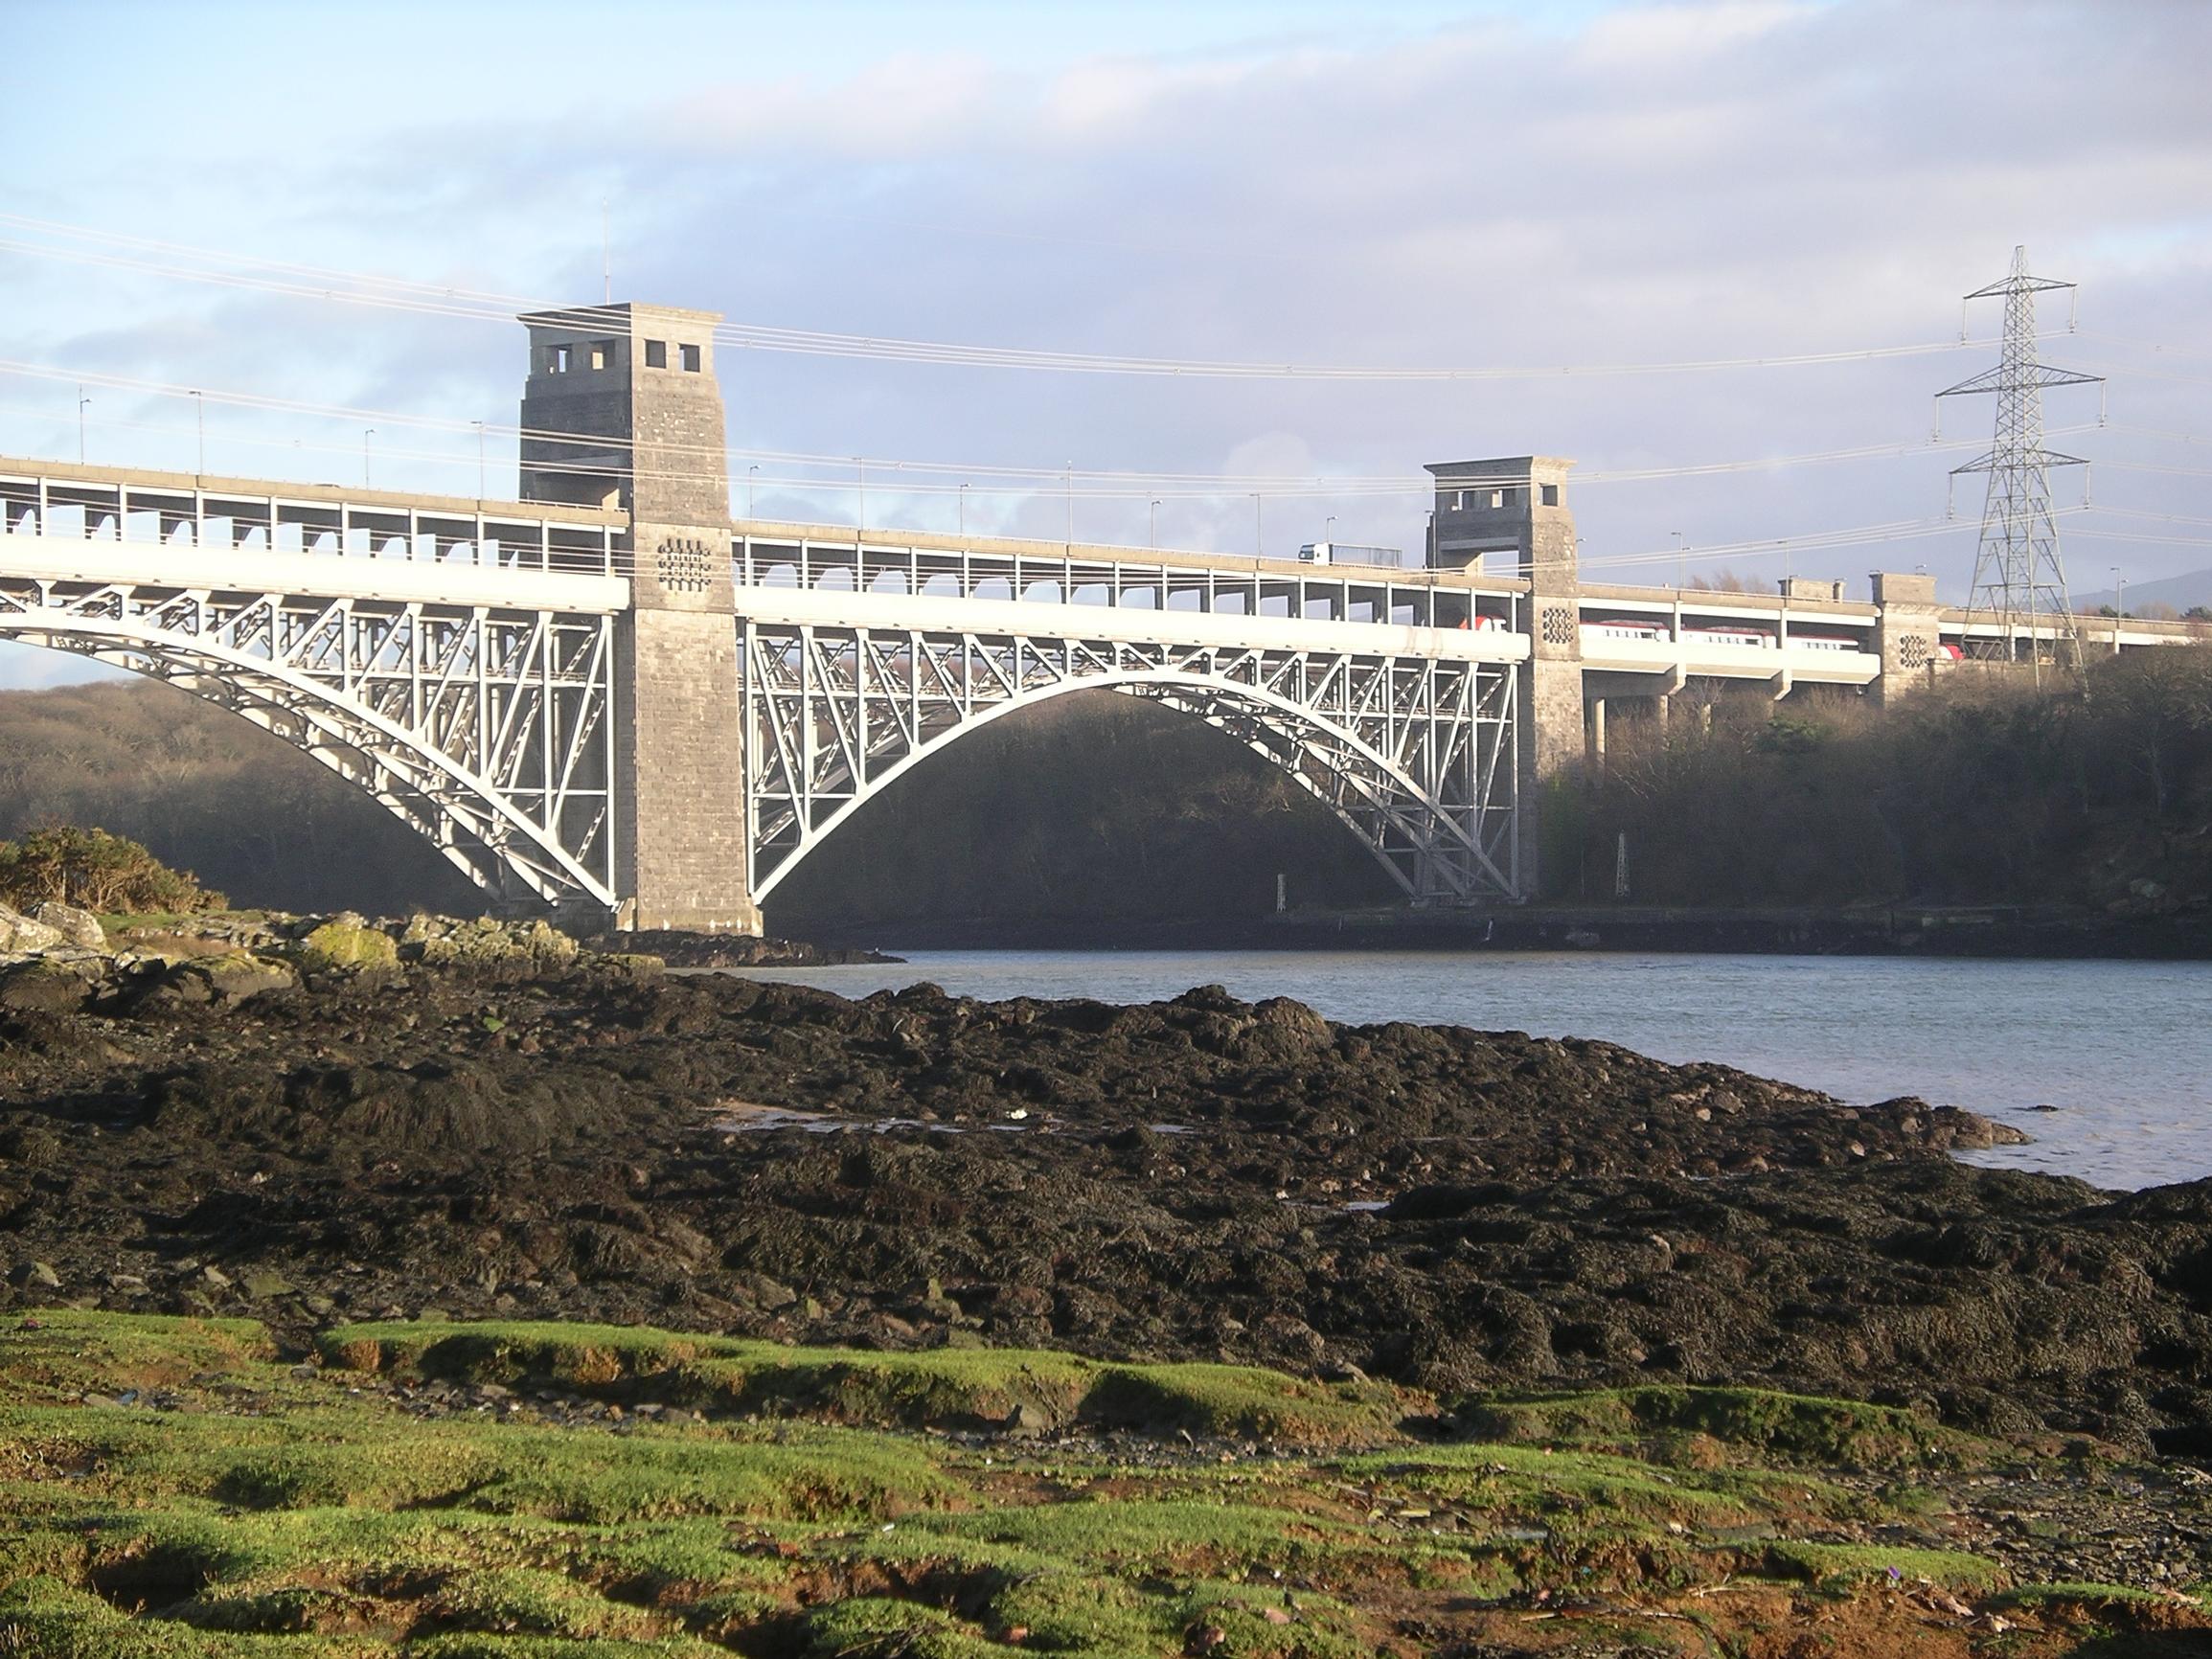 Britannia Bridge: Plans for a new bridge across the Menai Strait have been thrown into doubt